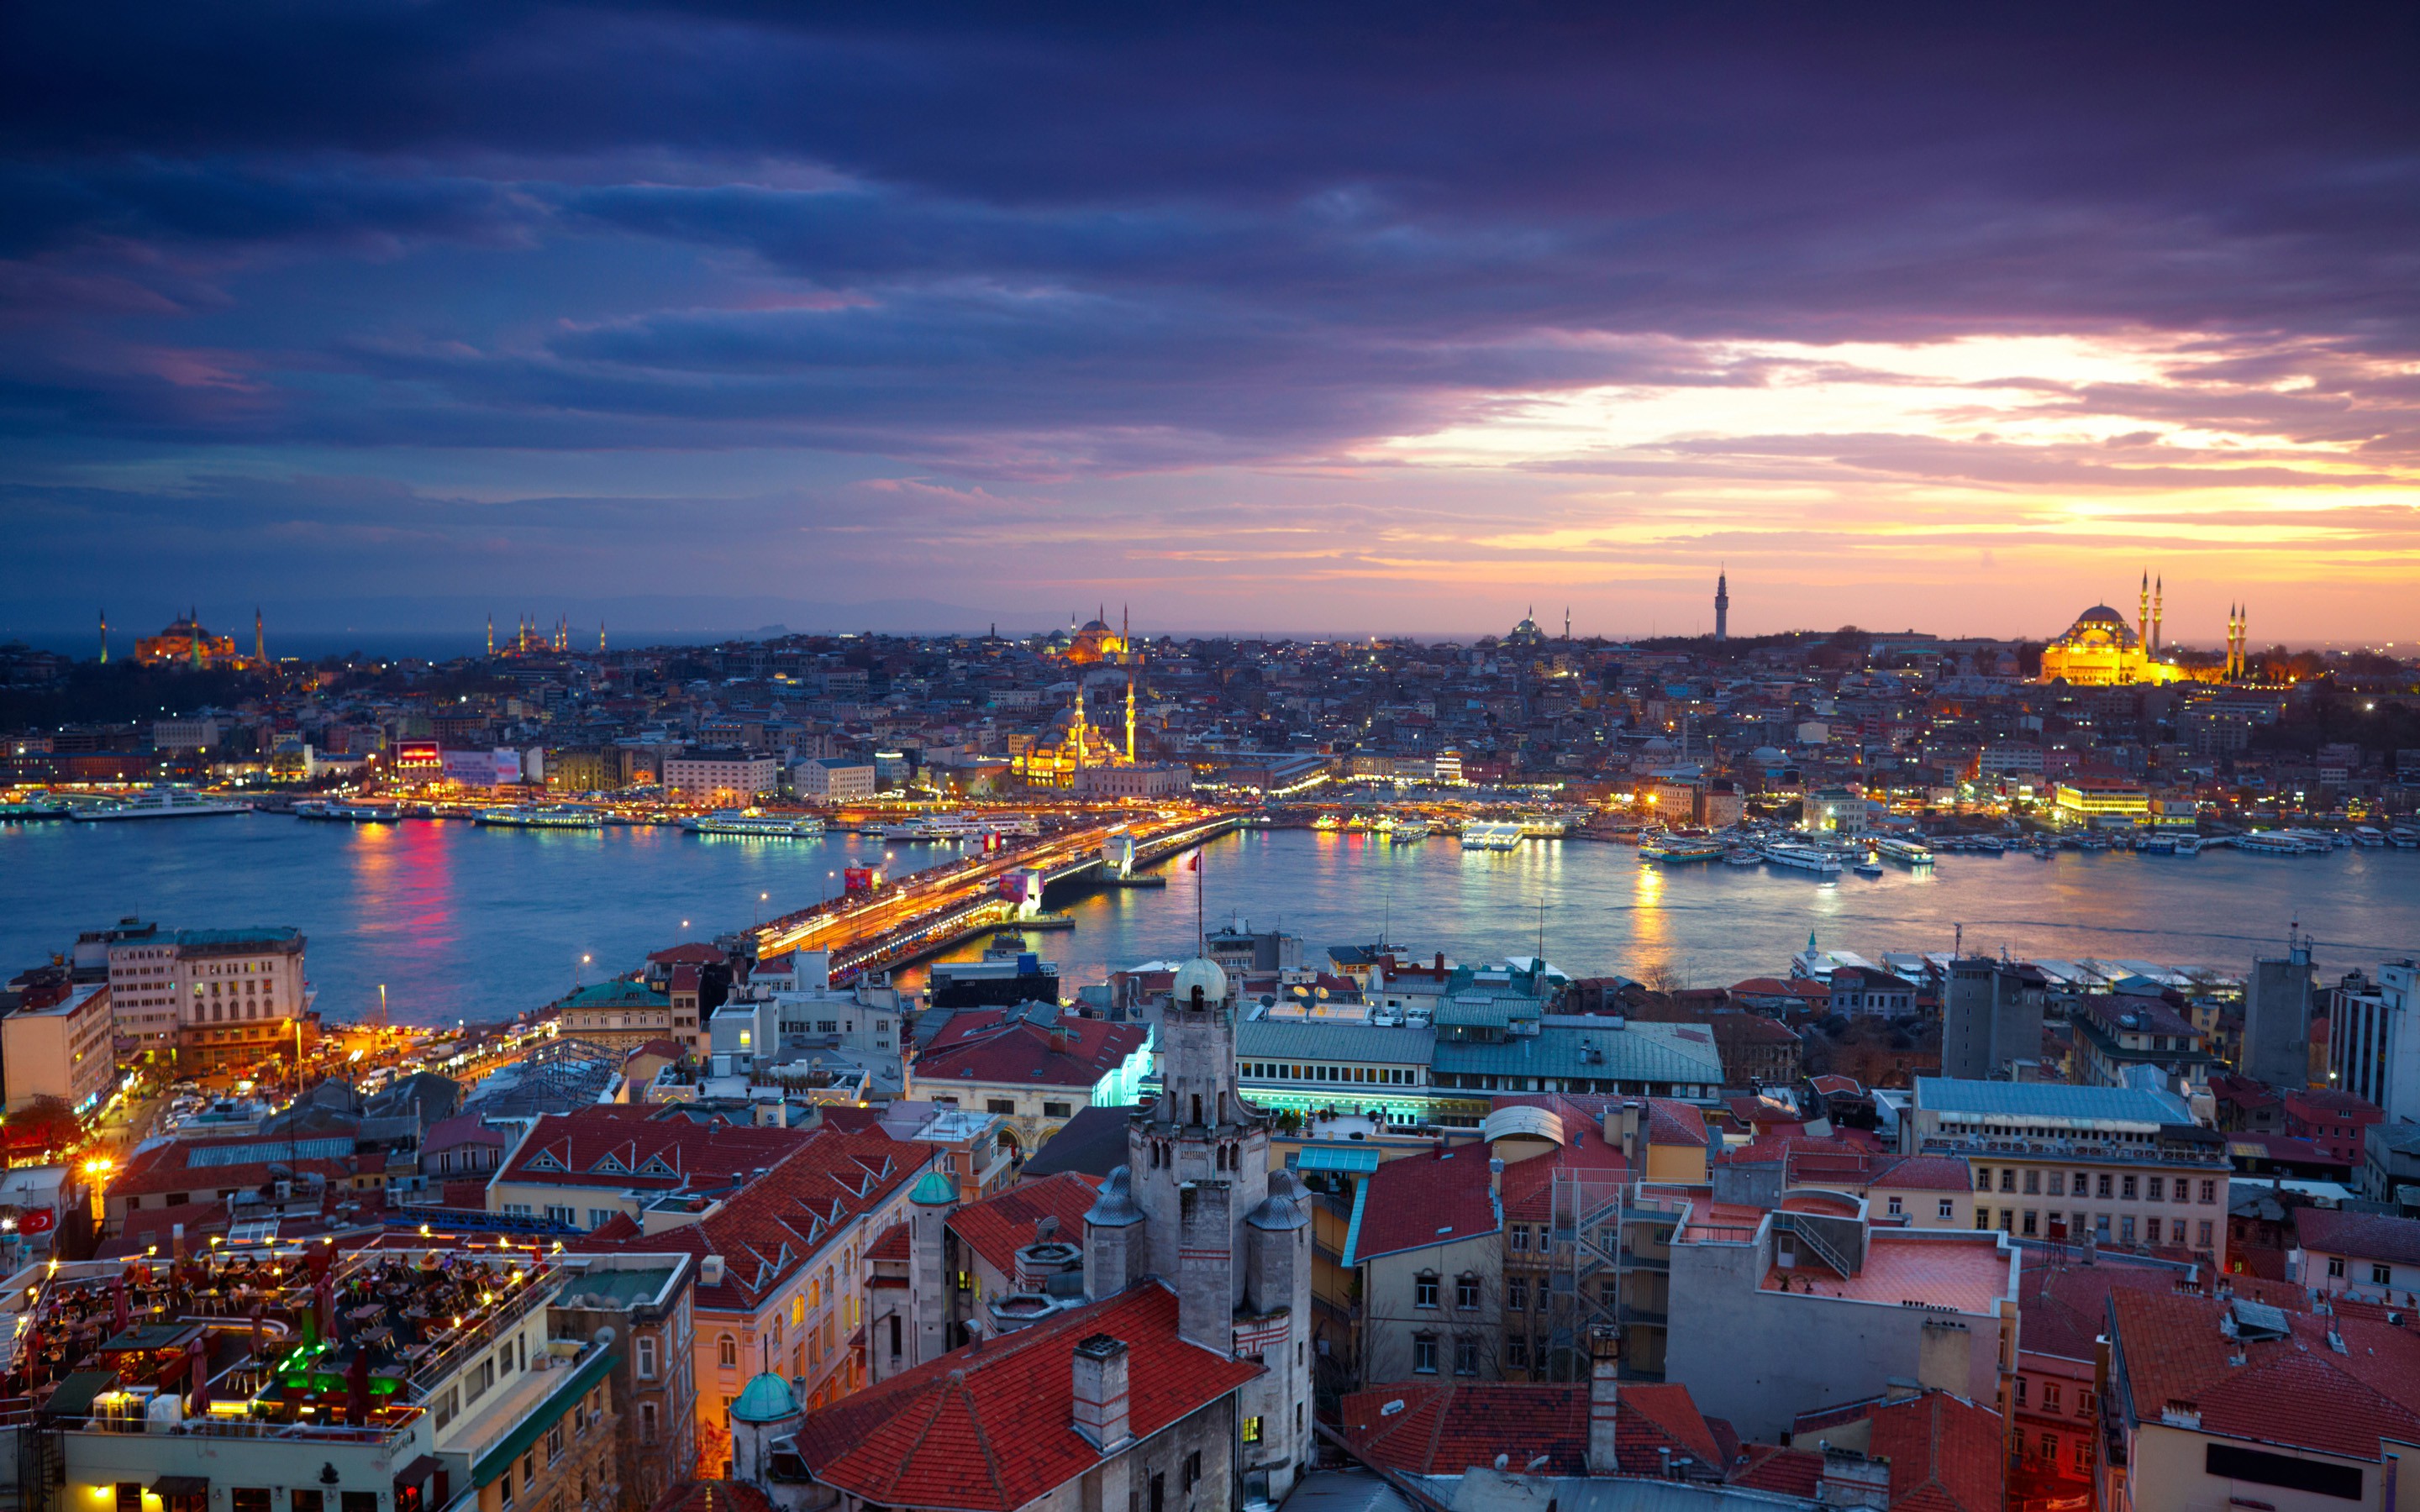 Bosphorus Strait in Istanbul Turkey Ultra HD Wallpaper for Desktop mobile  phones and laptops 2880x1800 : 